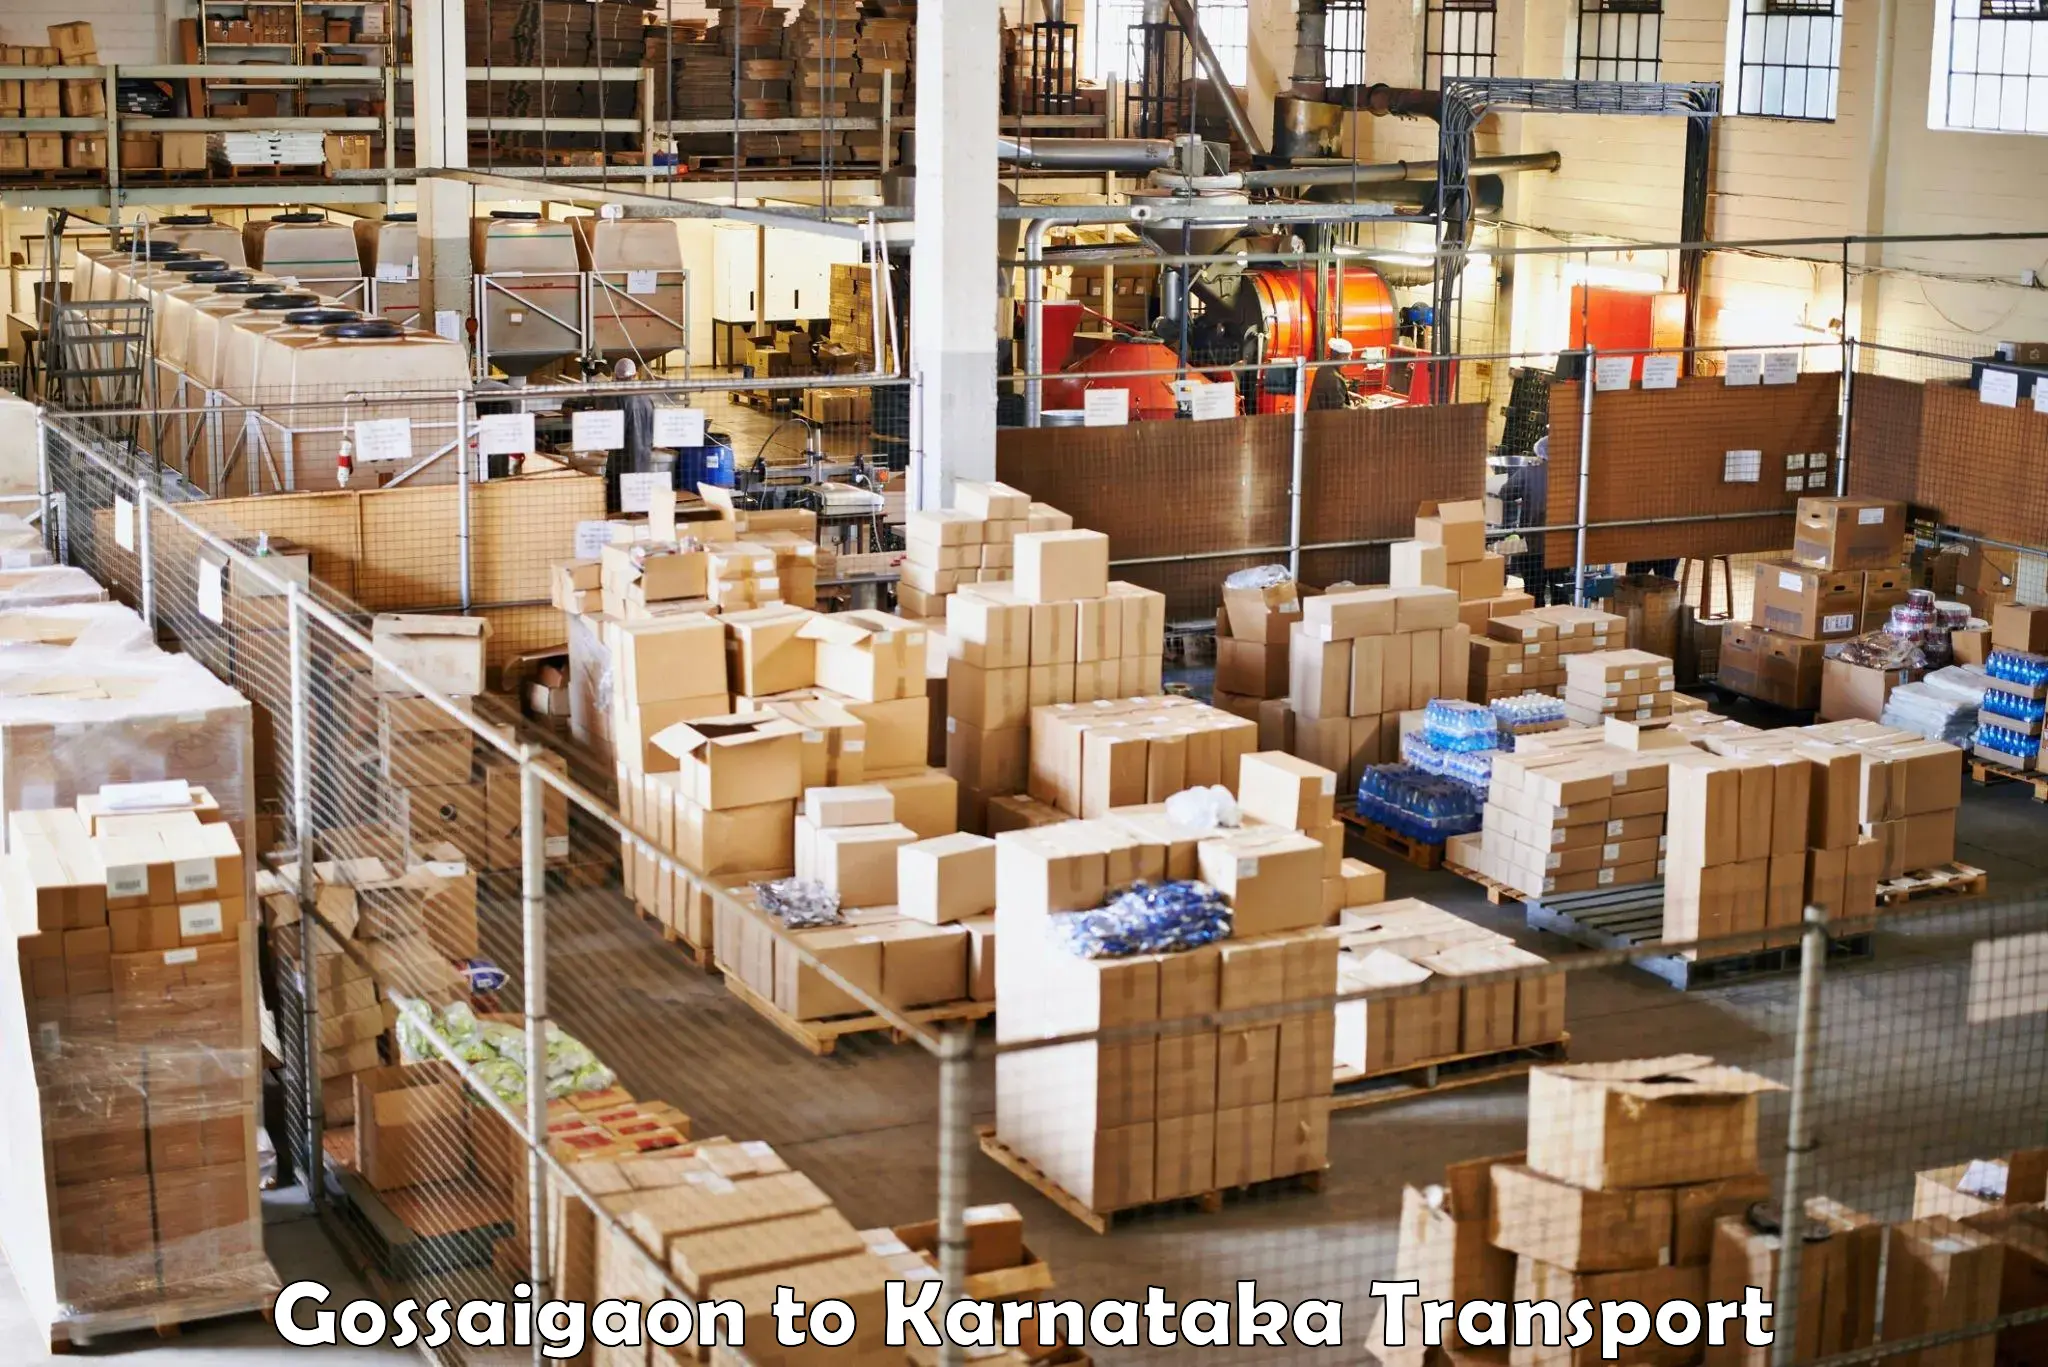 Truck transport companies in India in Gossaigaon to Krishnarajpete